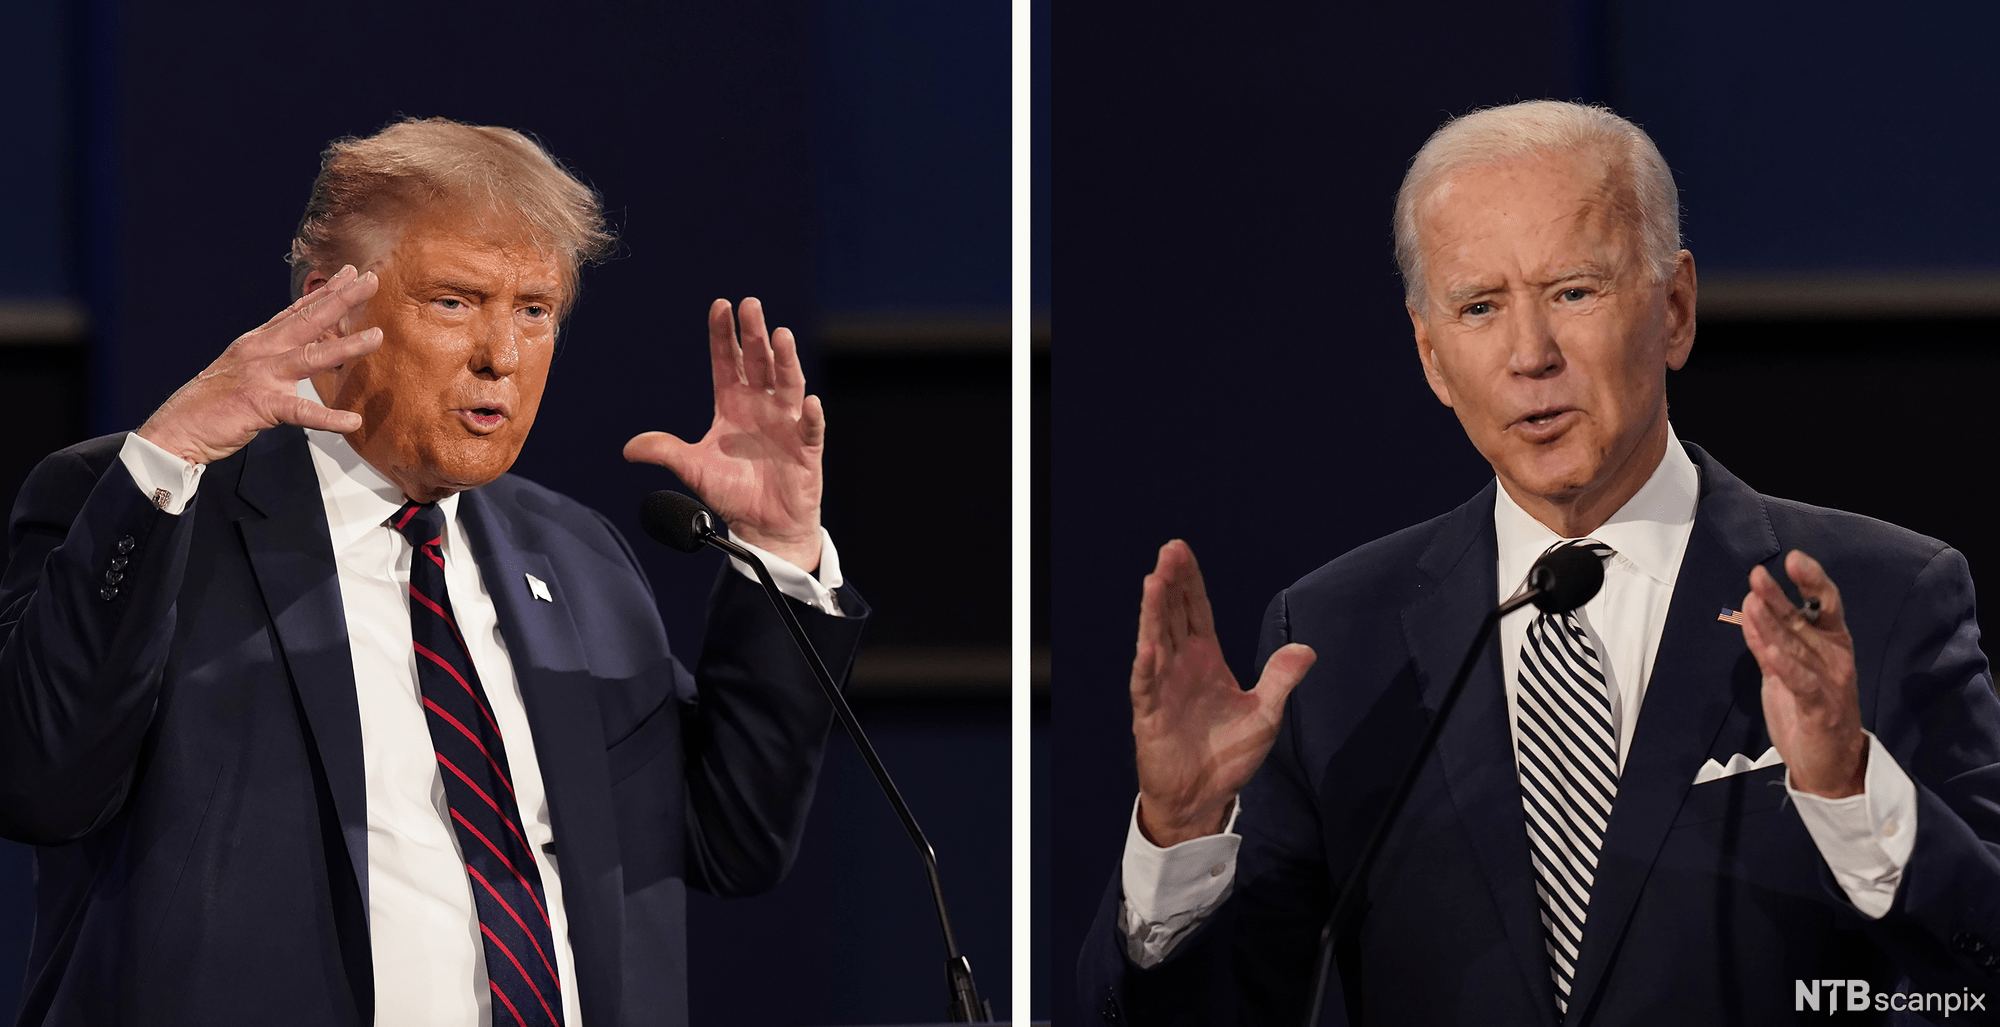 Trump vs Biden